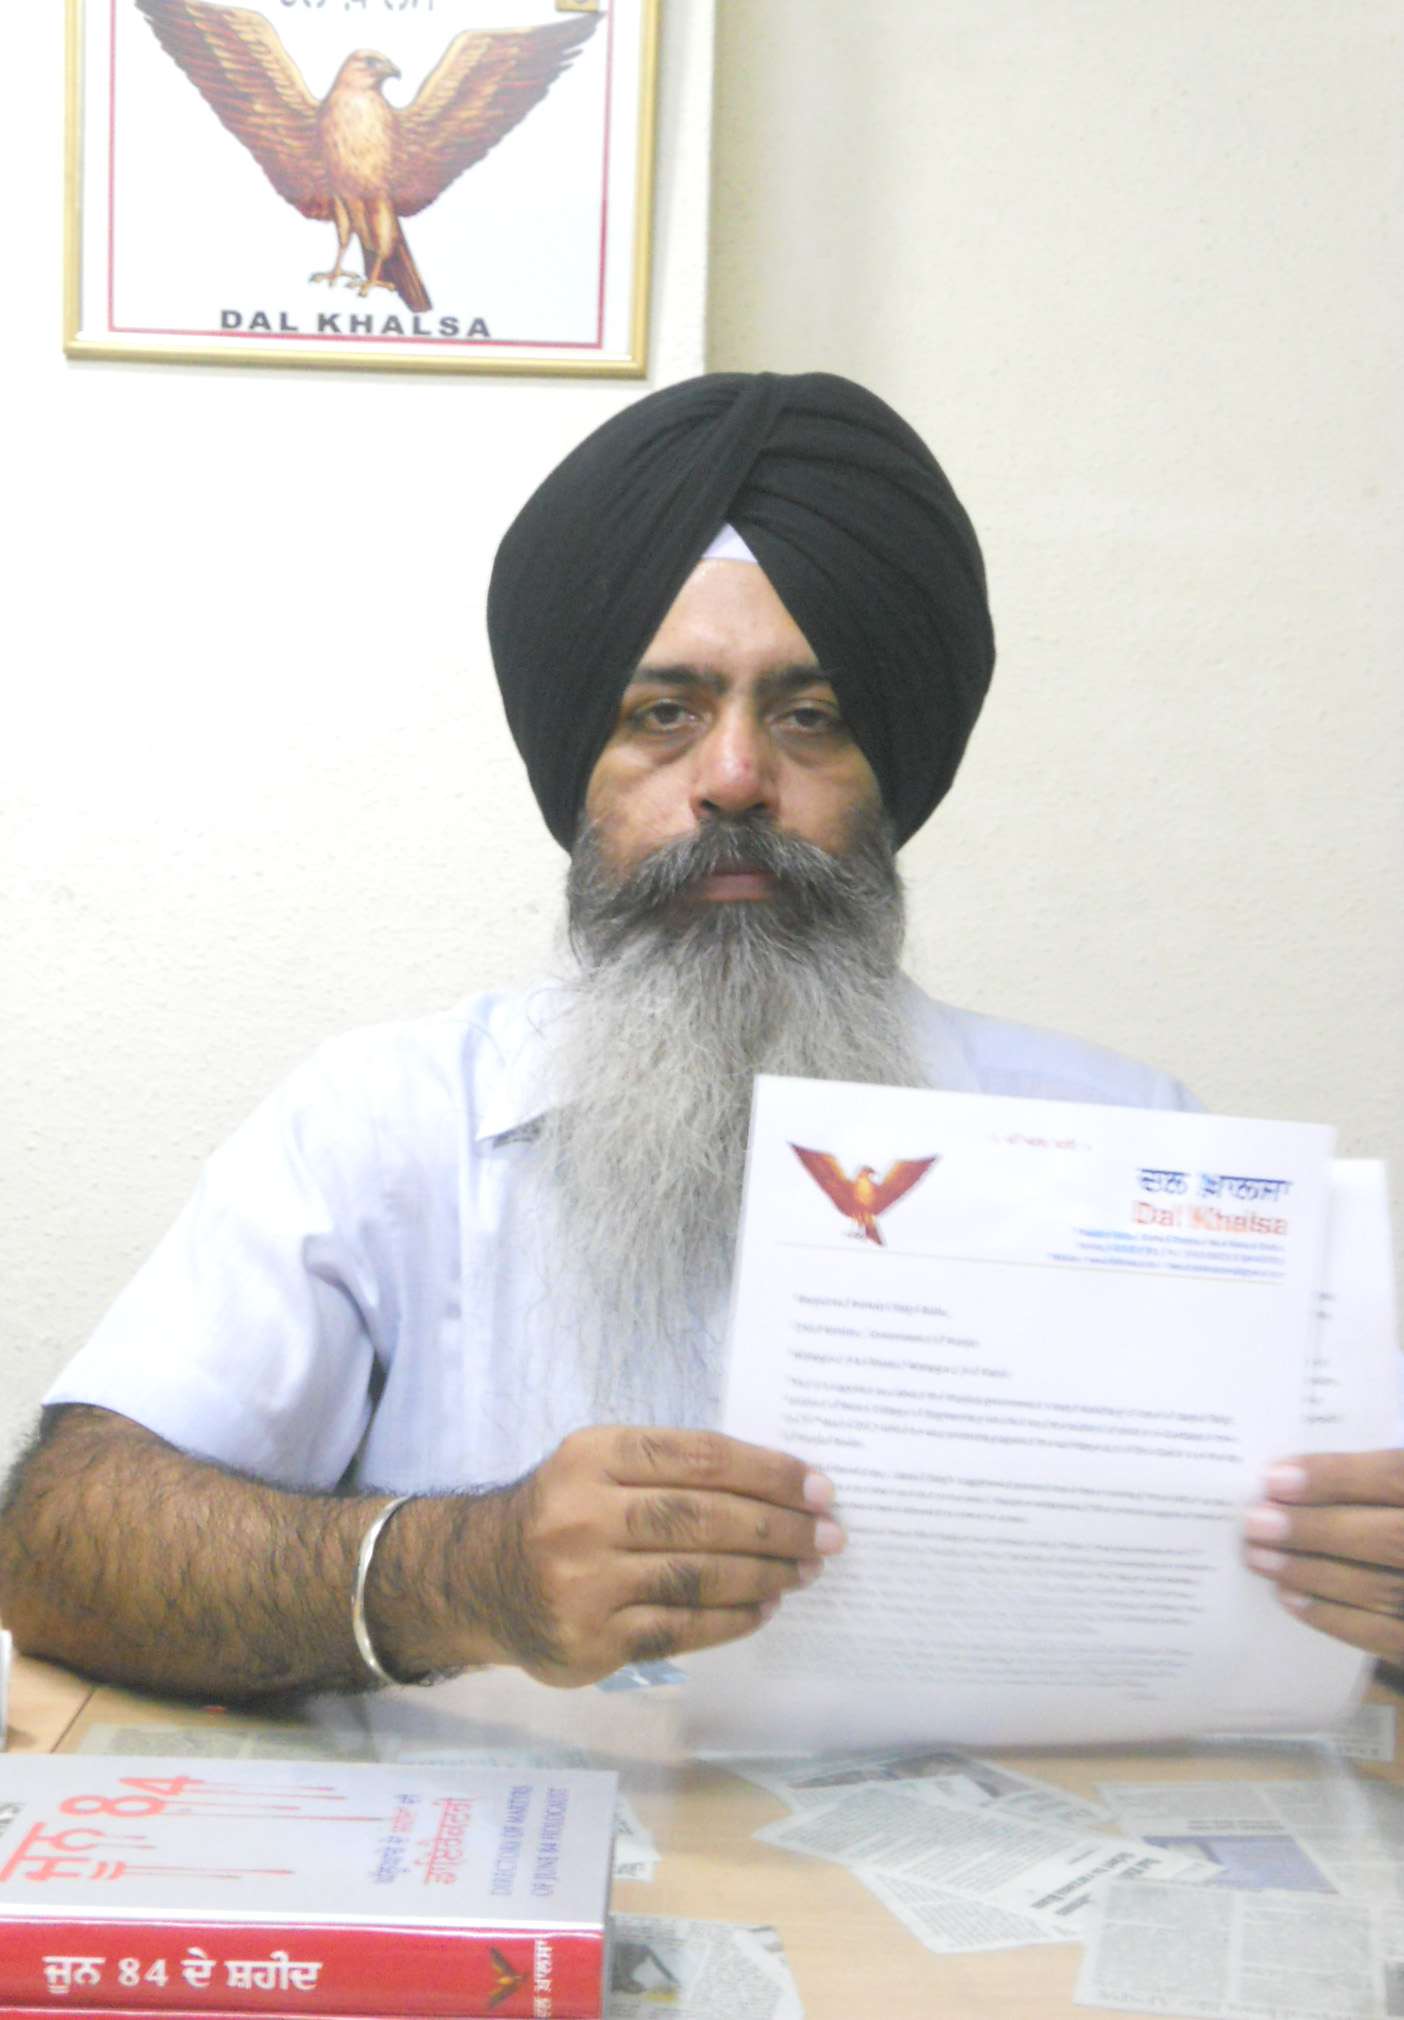 S. Kanwarpal Singh of Dal Khalsa showing letter sent to Punjab CM